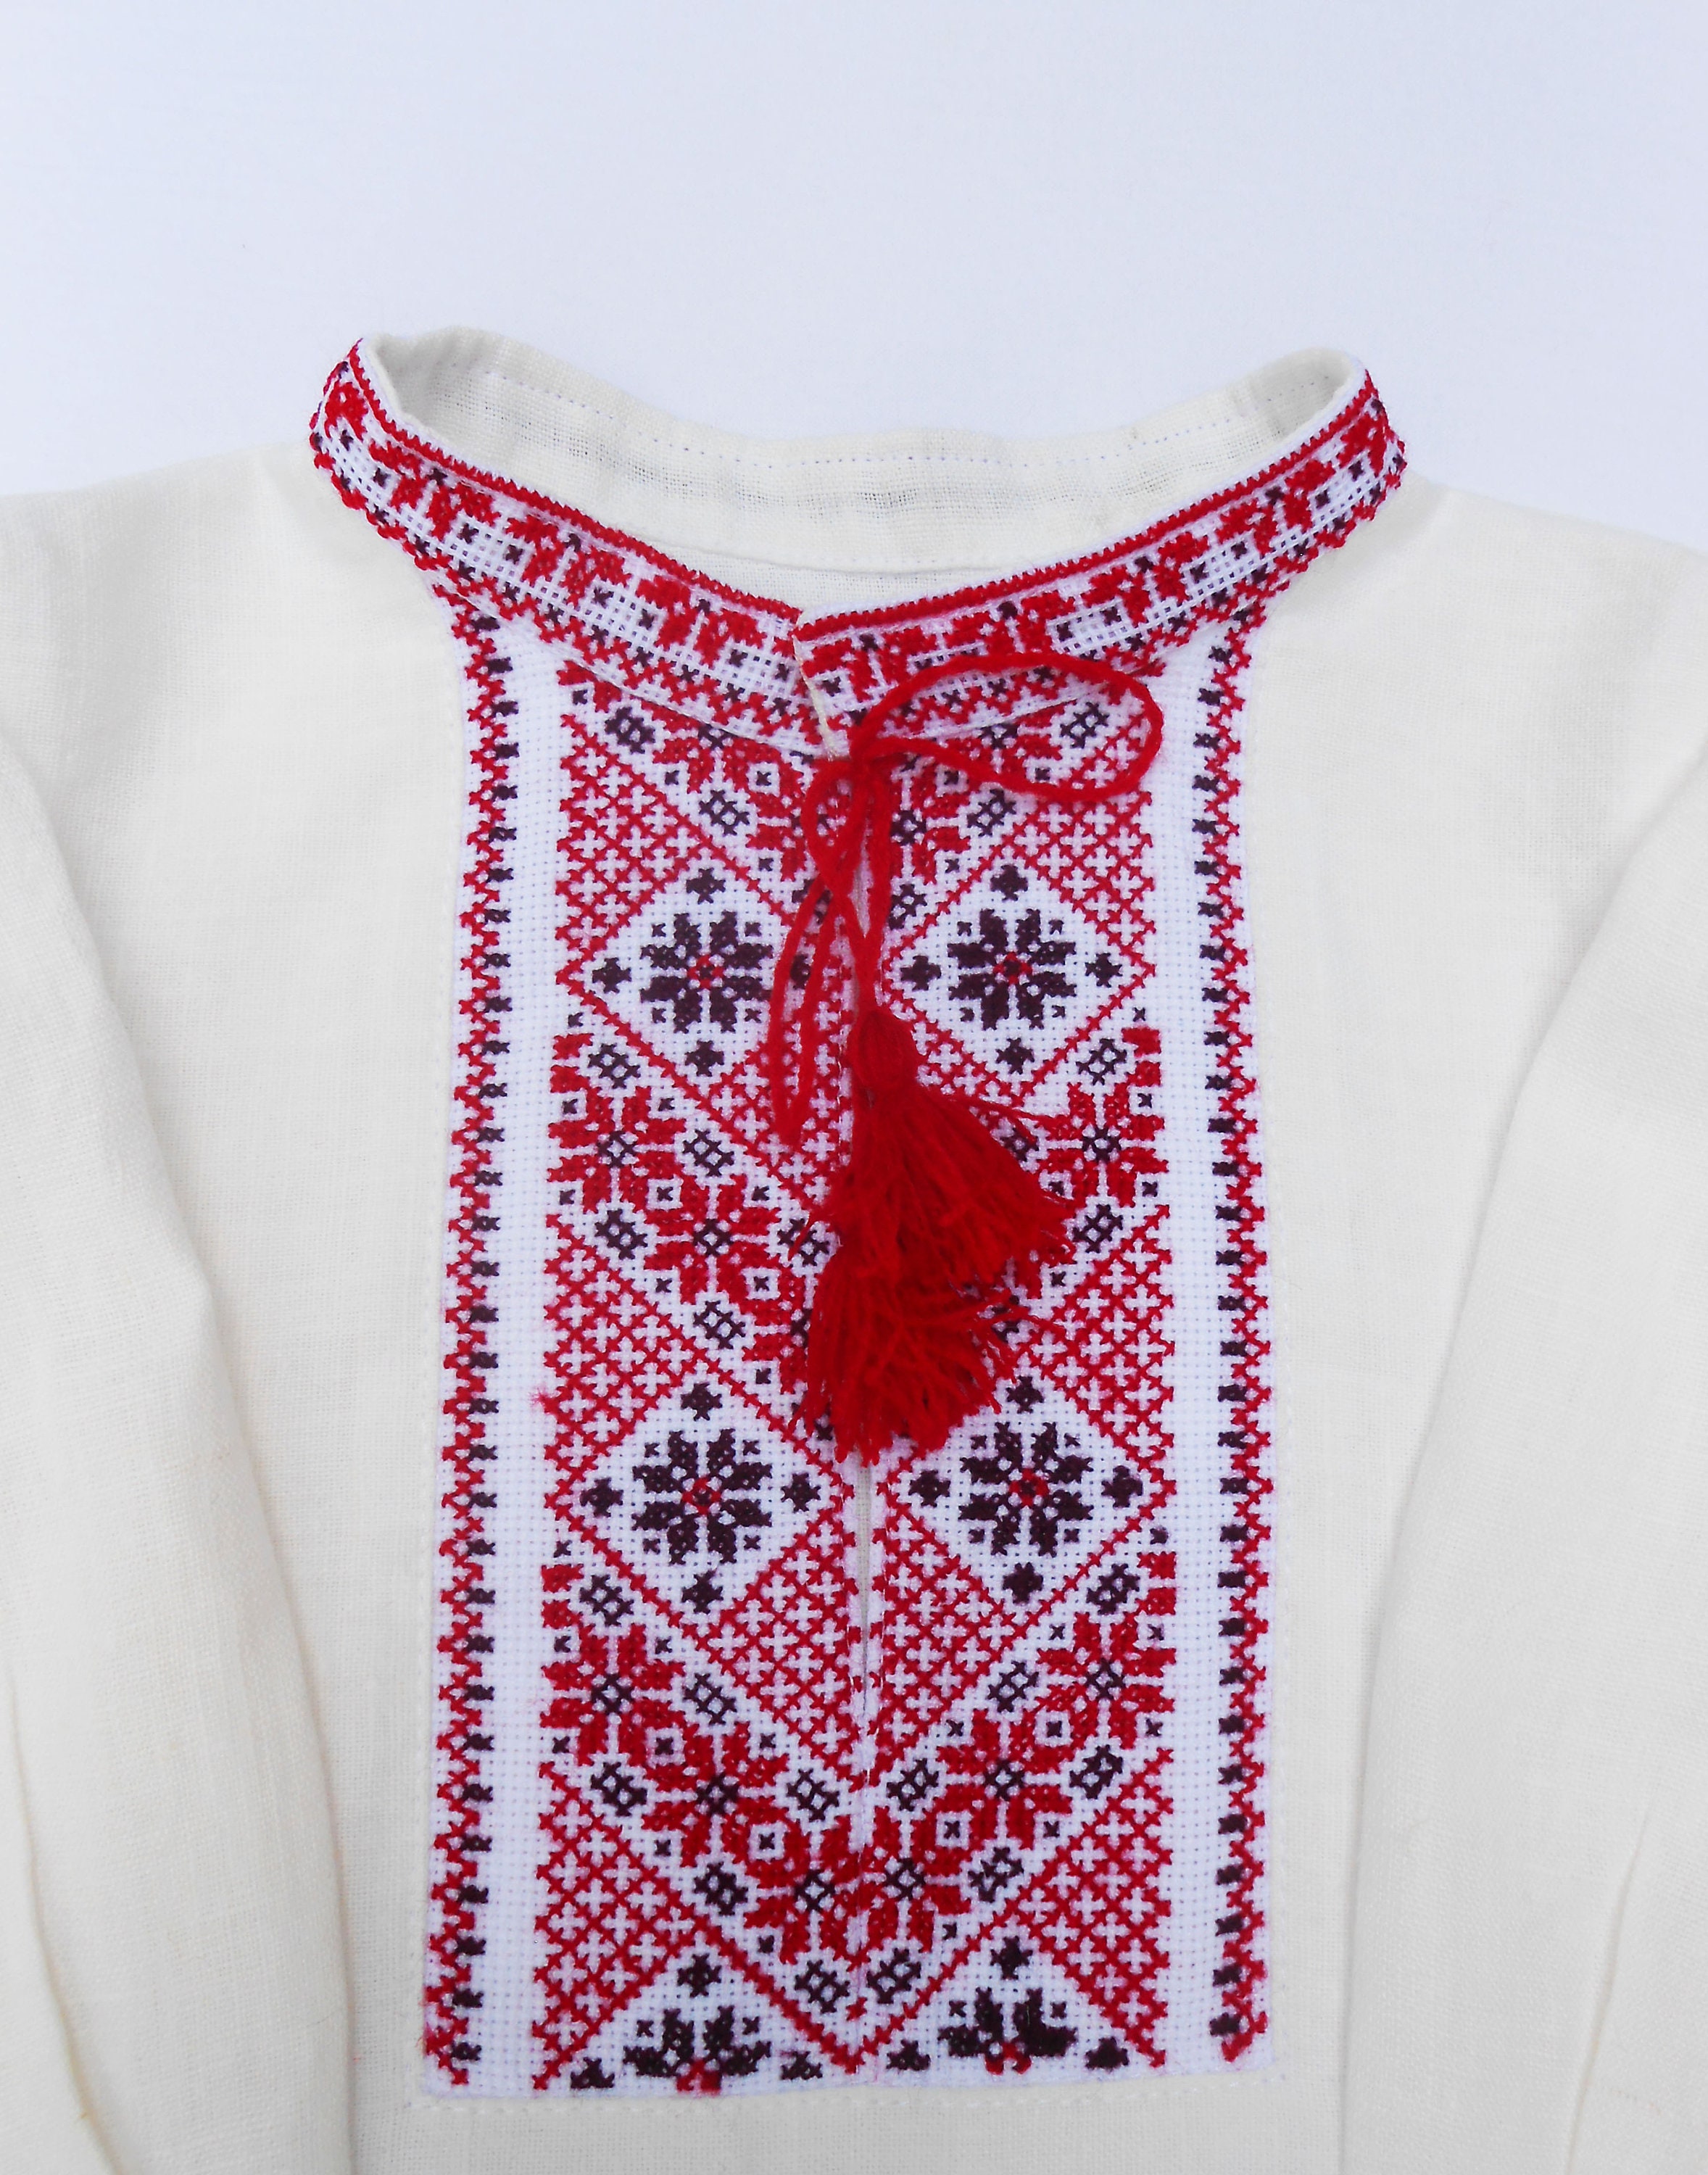 Ukrainian hand embroidered white shirt for boy Ethnic cross stitch red black embroidery Slavic carpathian folk costume Easter gift for kid